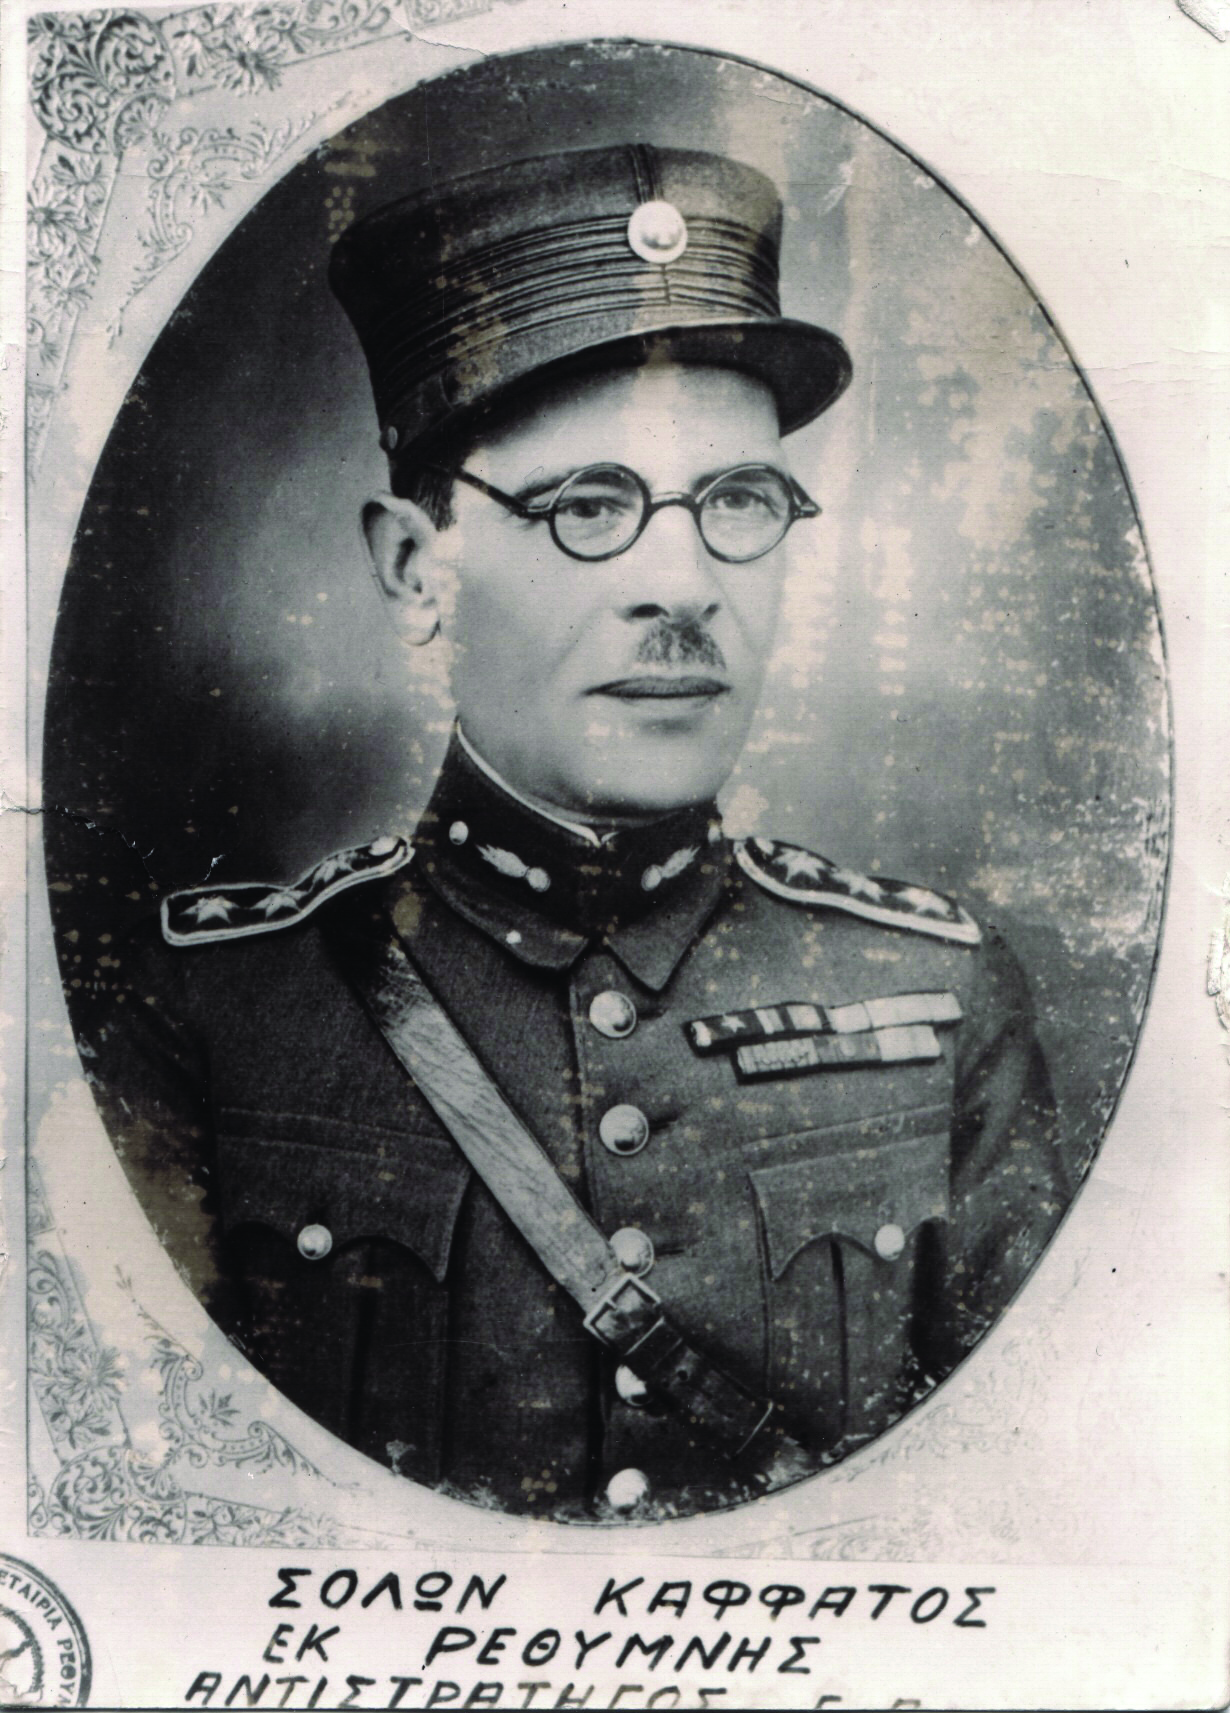 11 General Solon Kaffatos